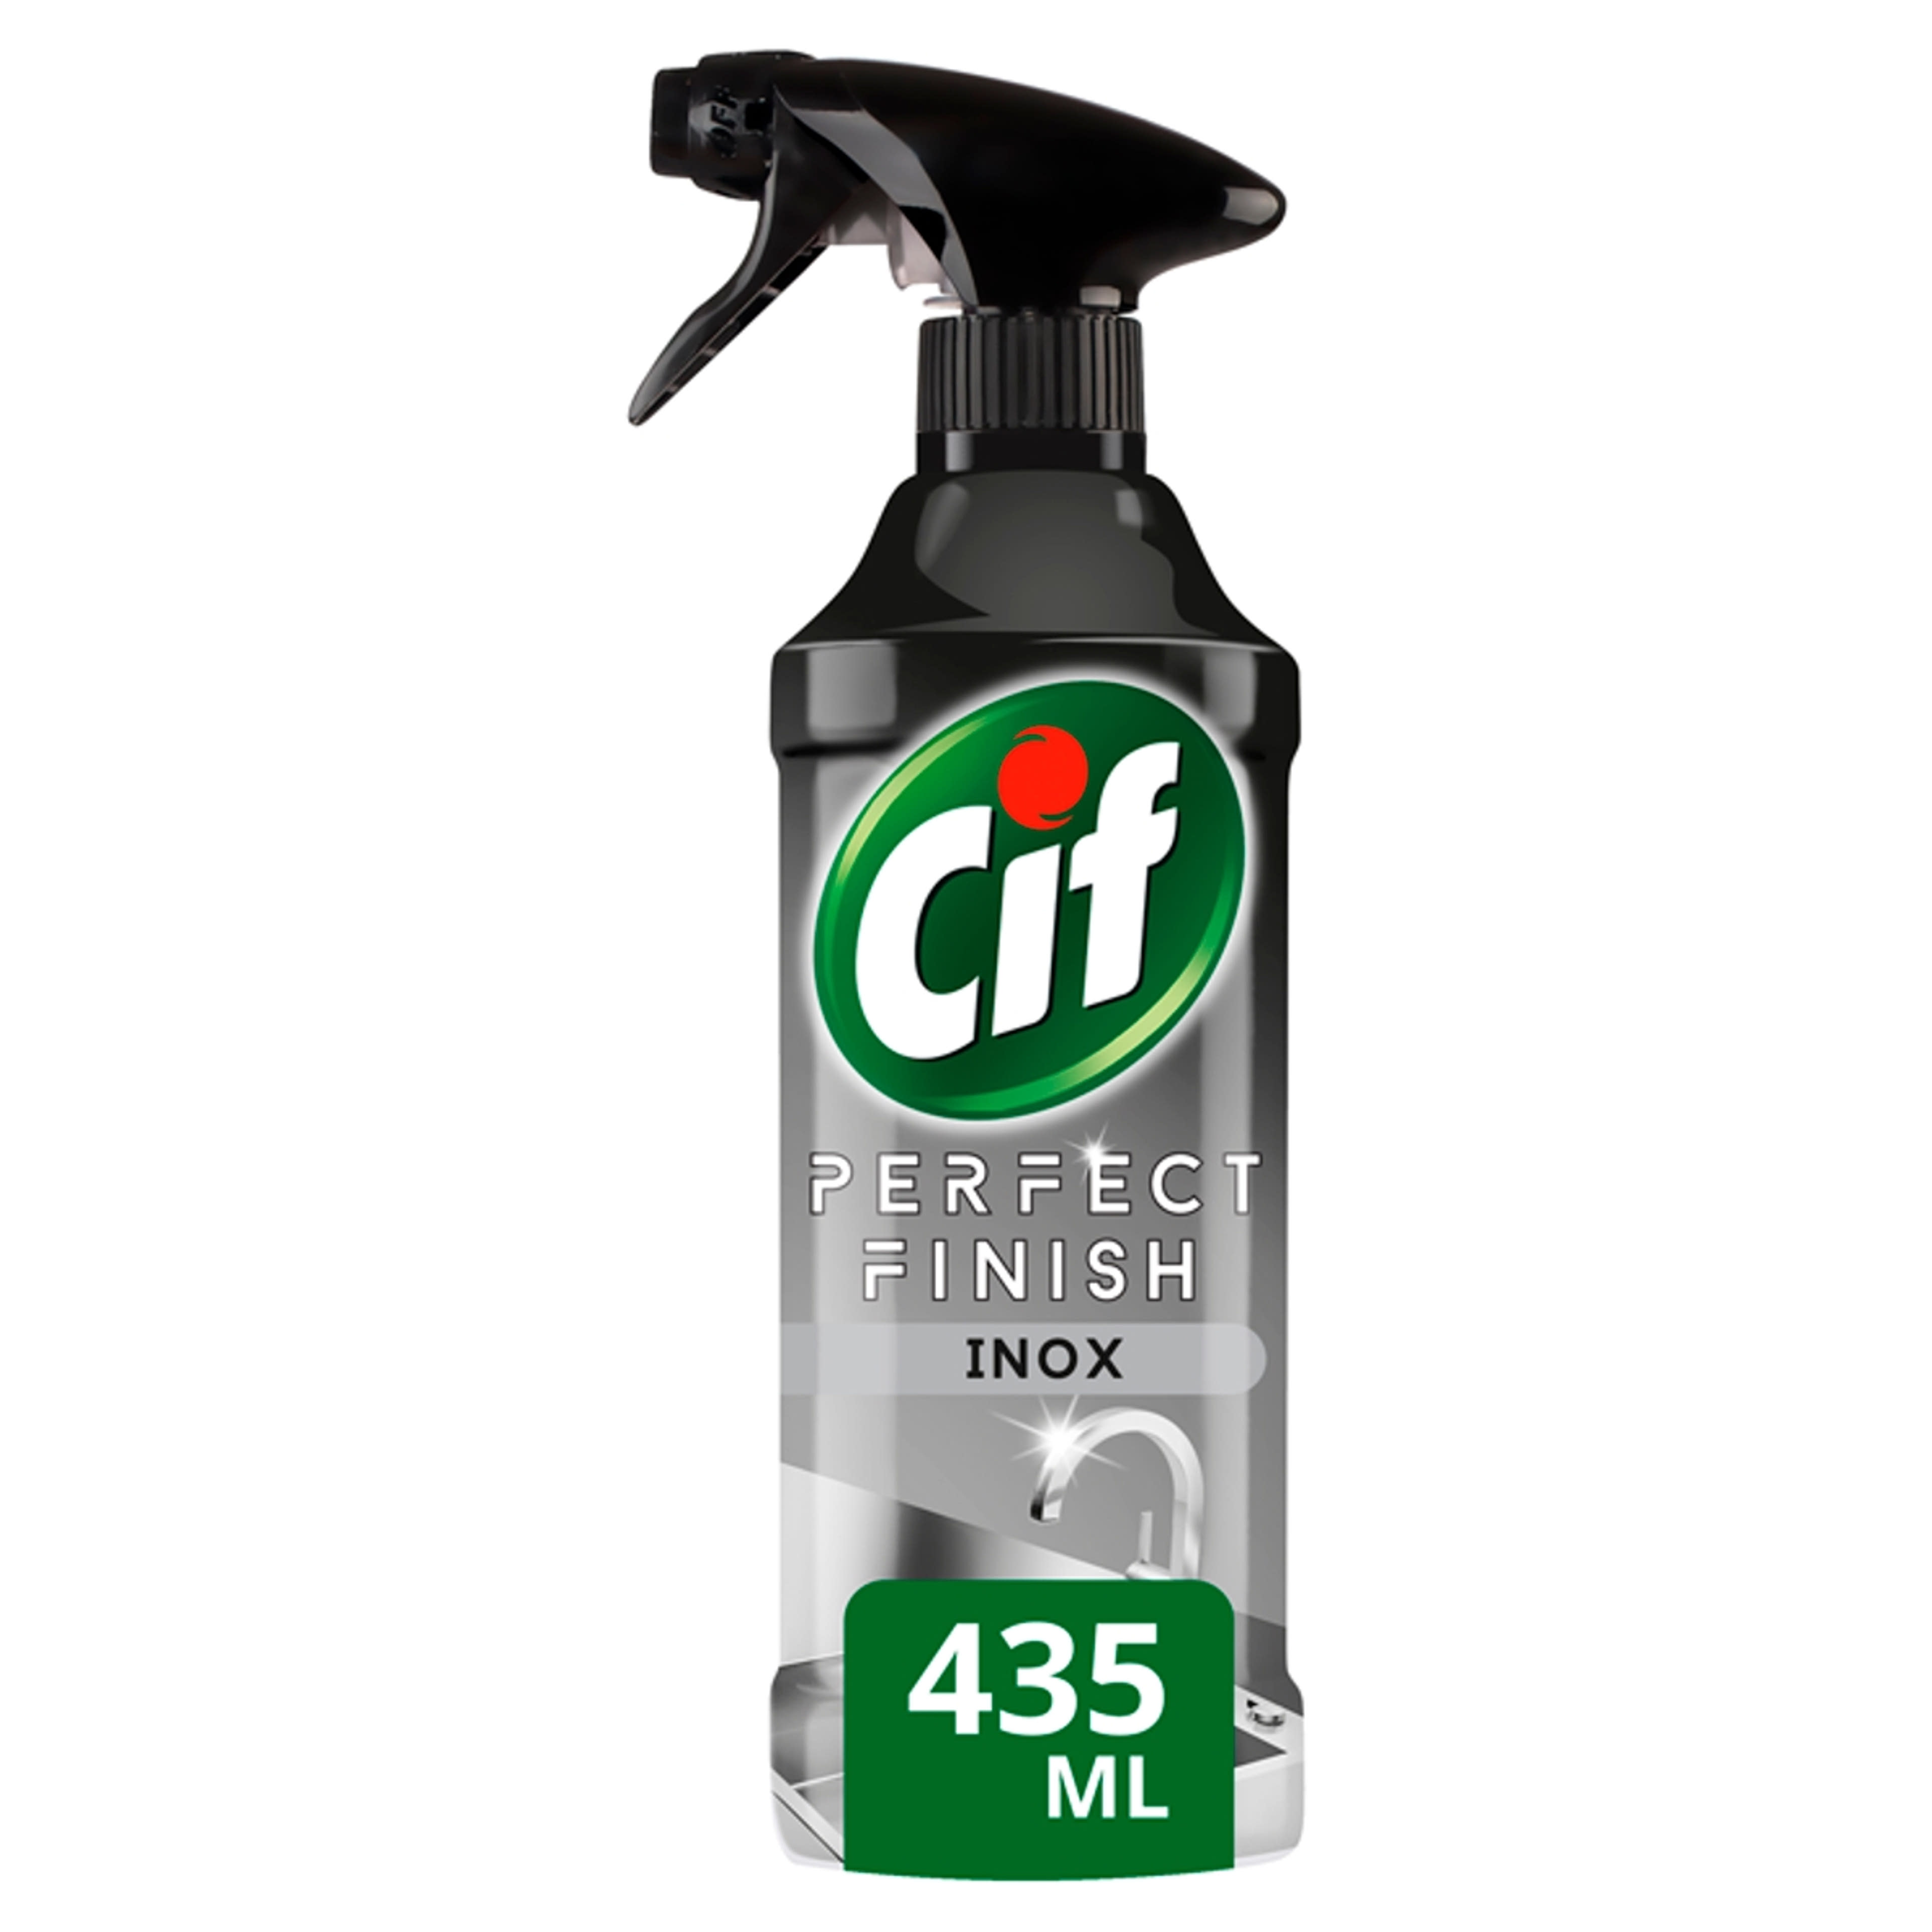 Cif Perfect Finish Inox Spray - 435 ml-2